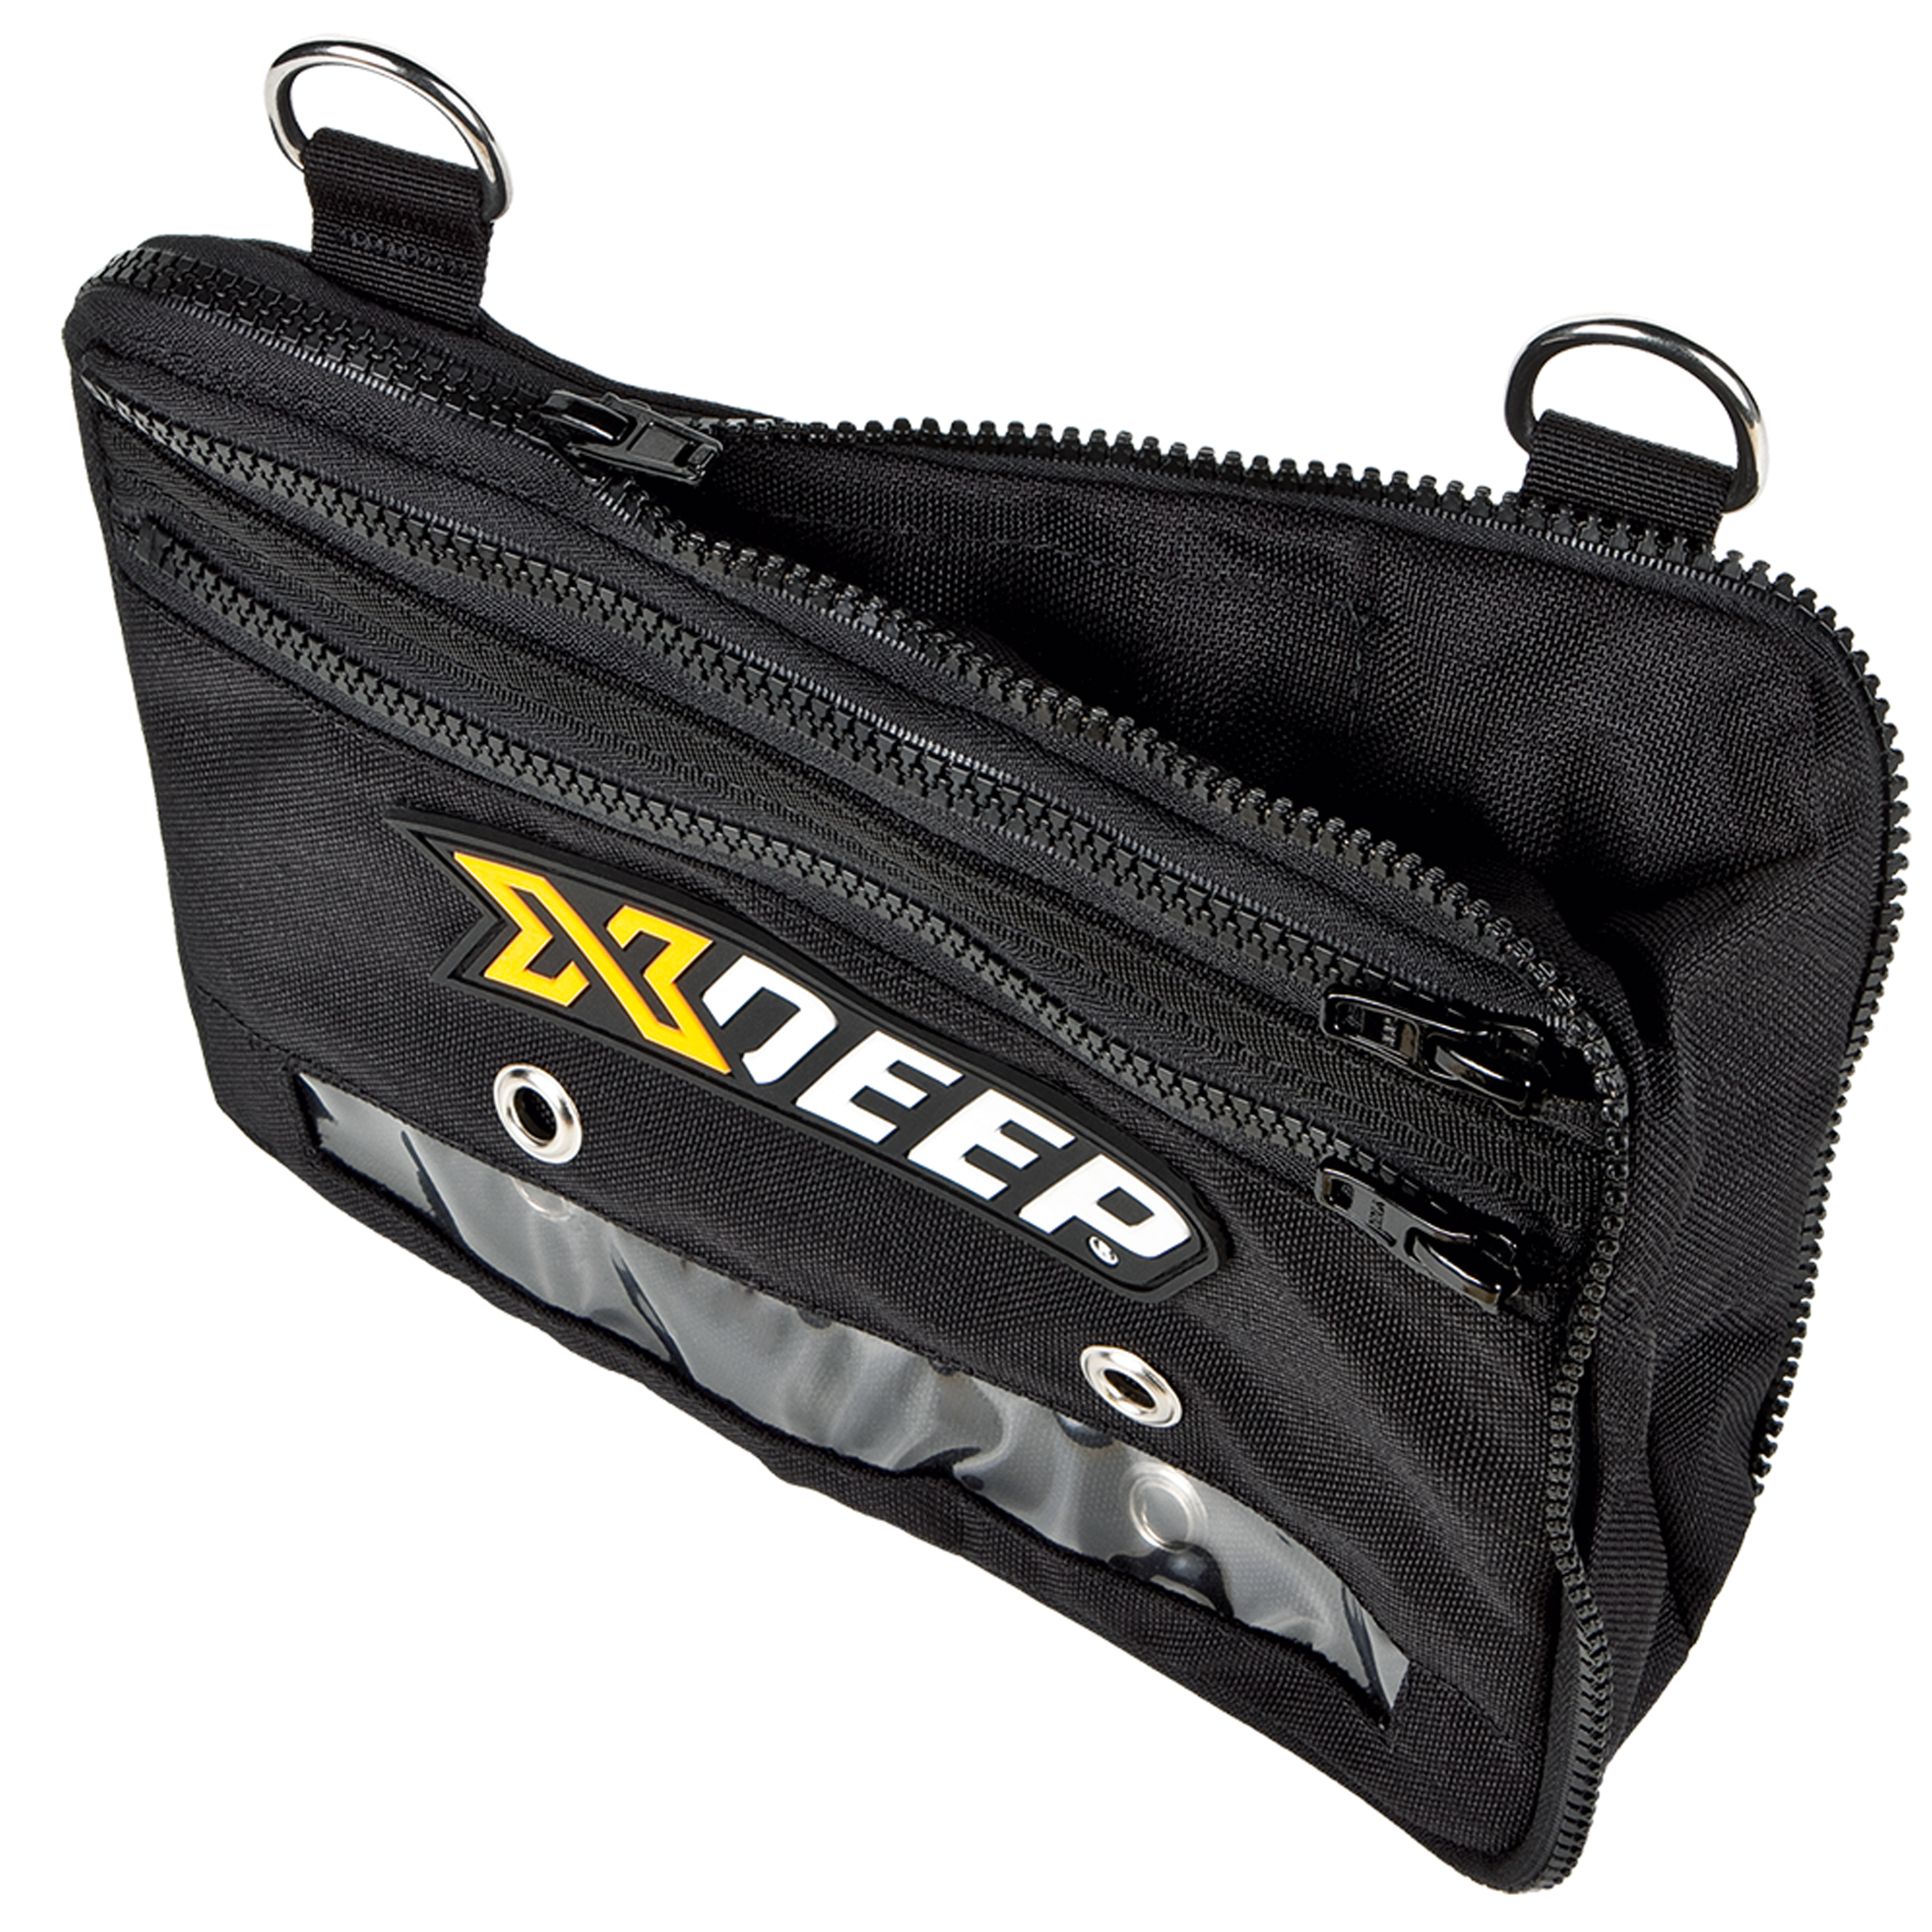 XDEEP Sidemount Tasche TEC, vergrößerbar